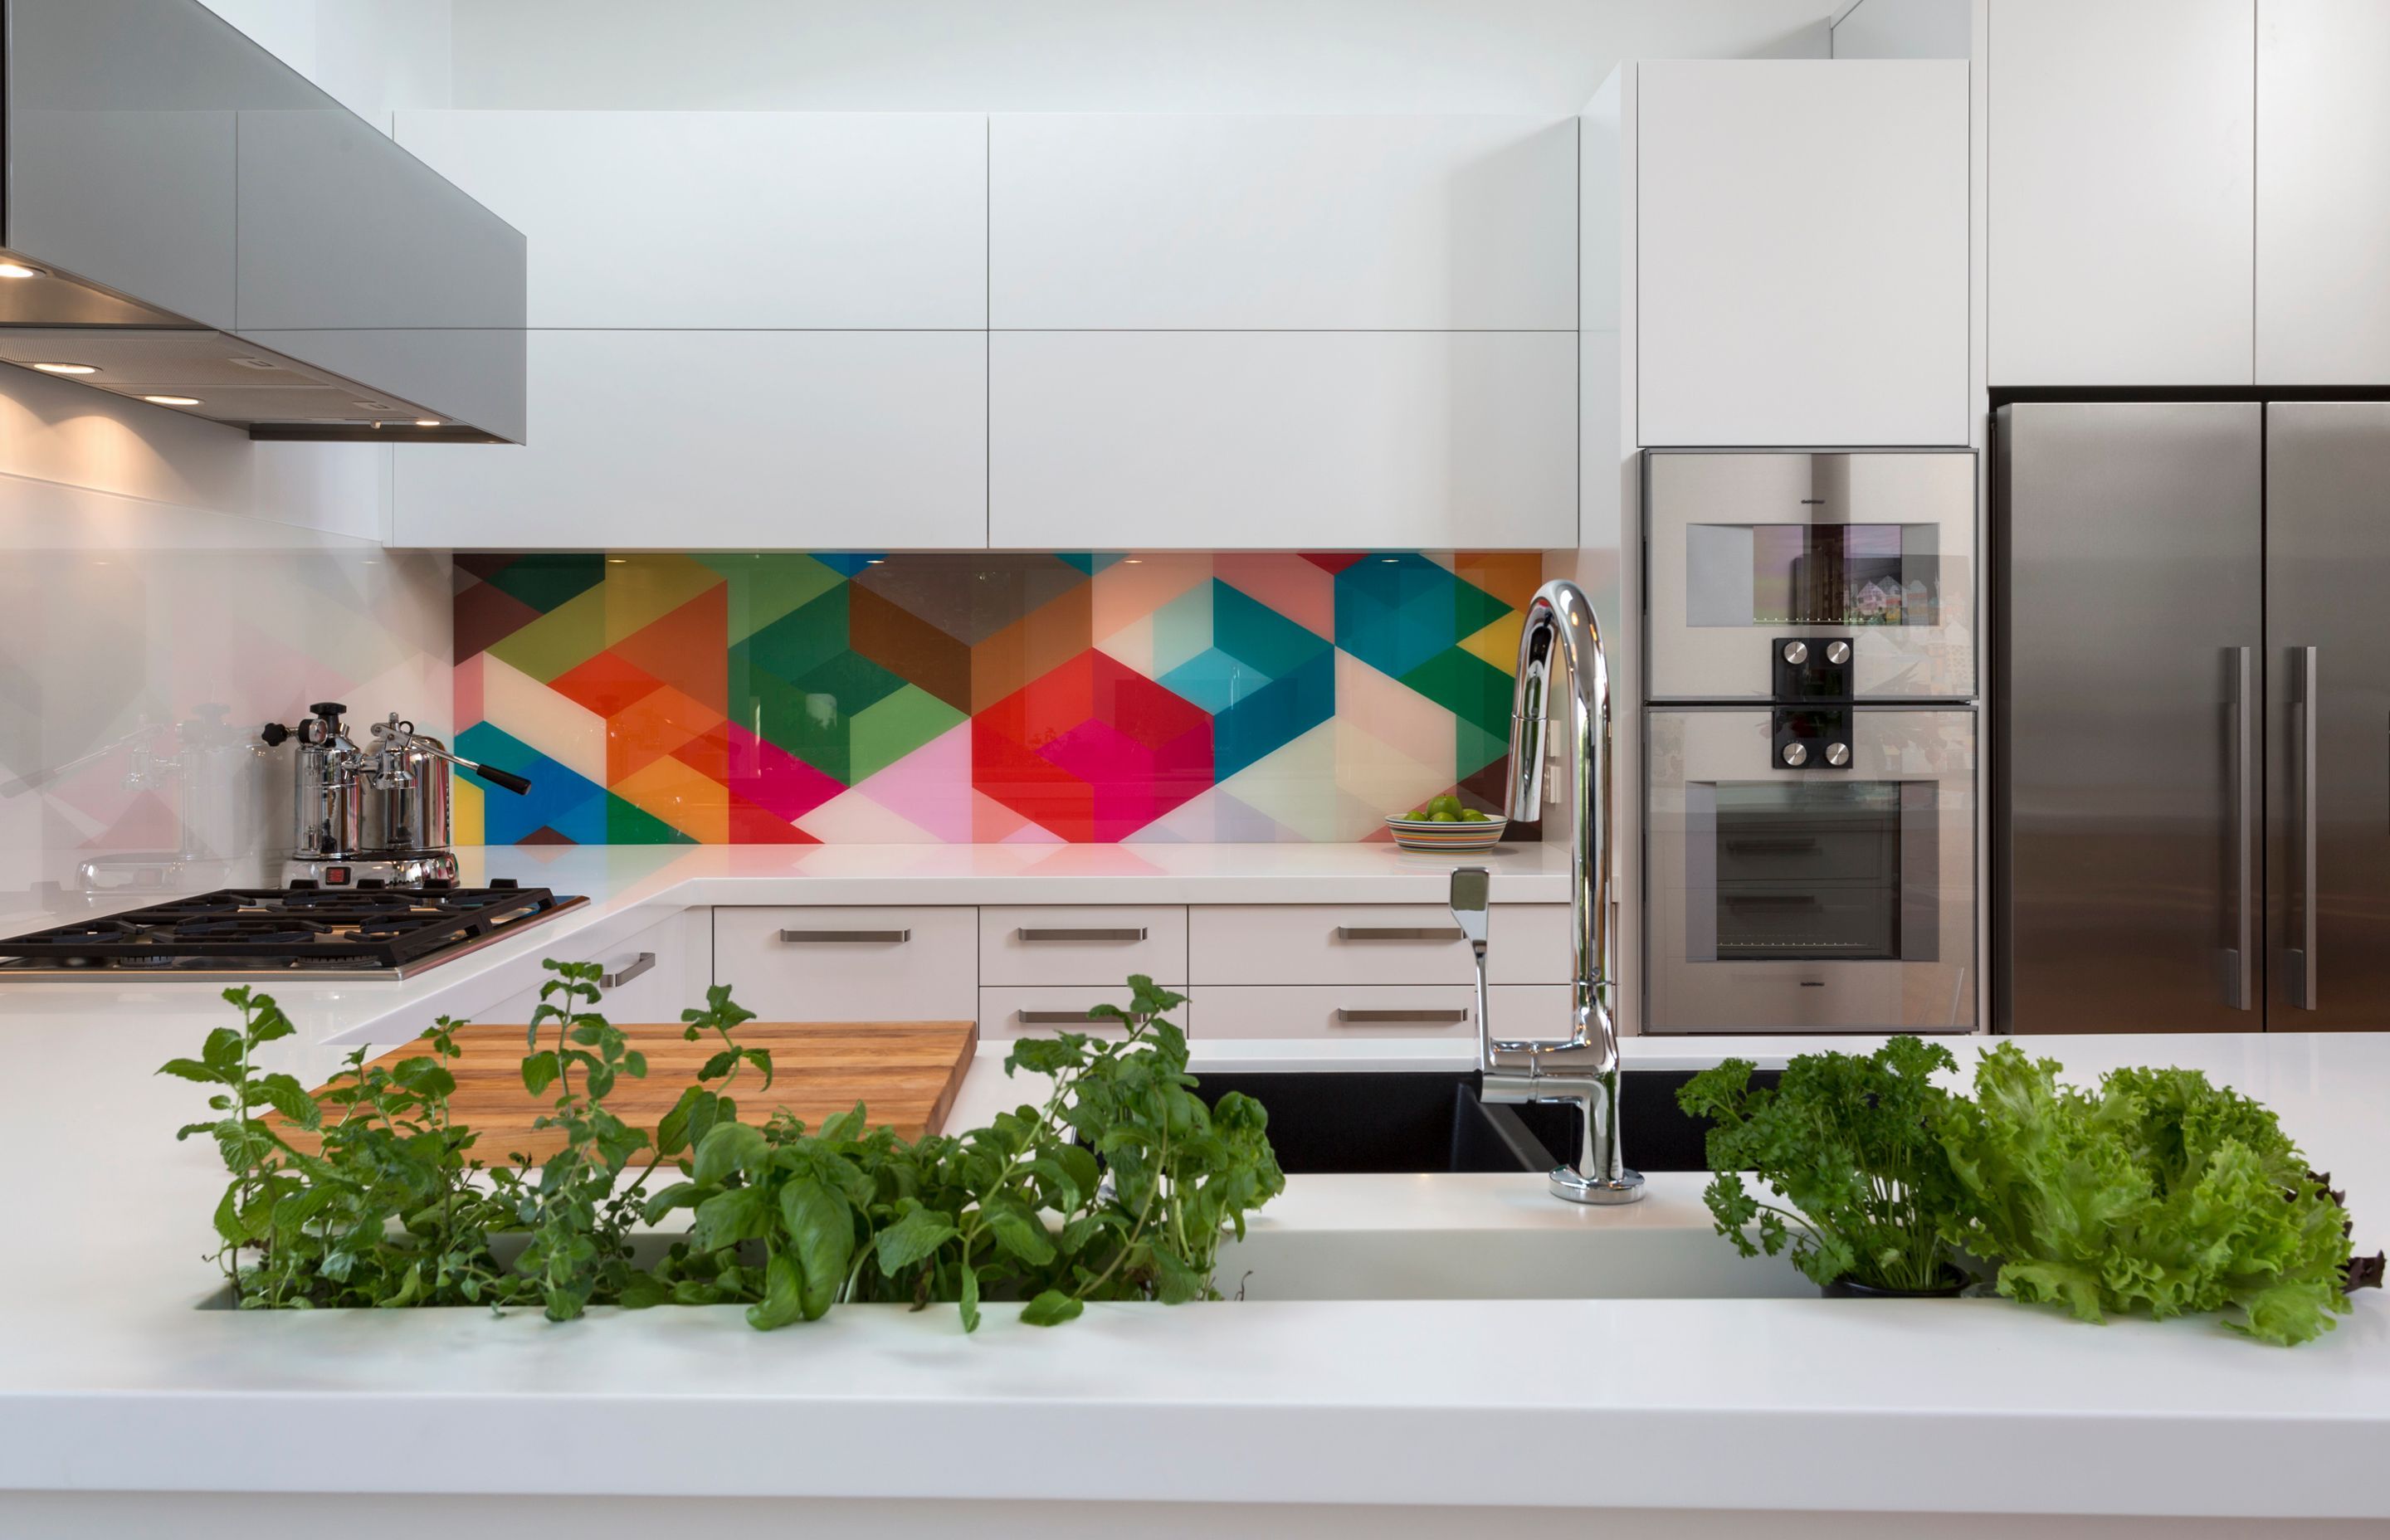 Geometric colour and adjacent geometric monochrome work harmoniously in this white kitchen.  Kitchen by Kitchen Architecture